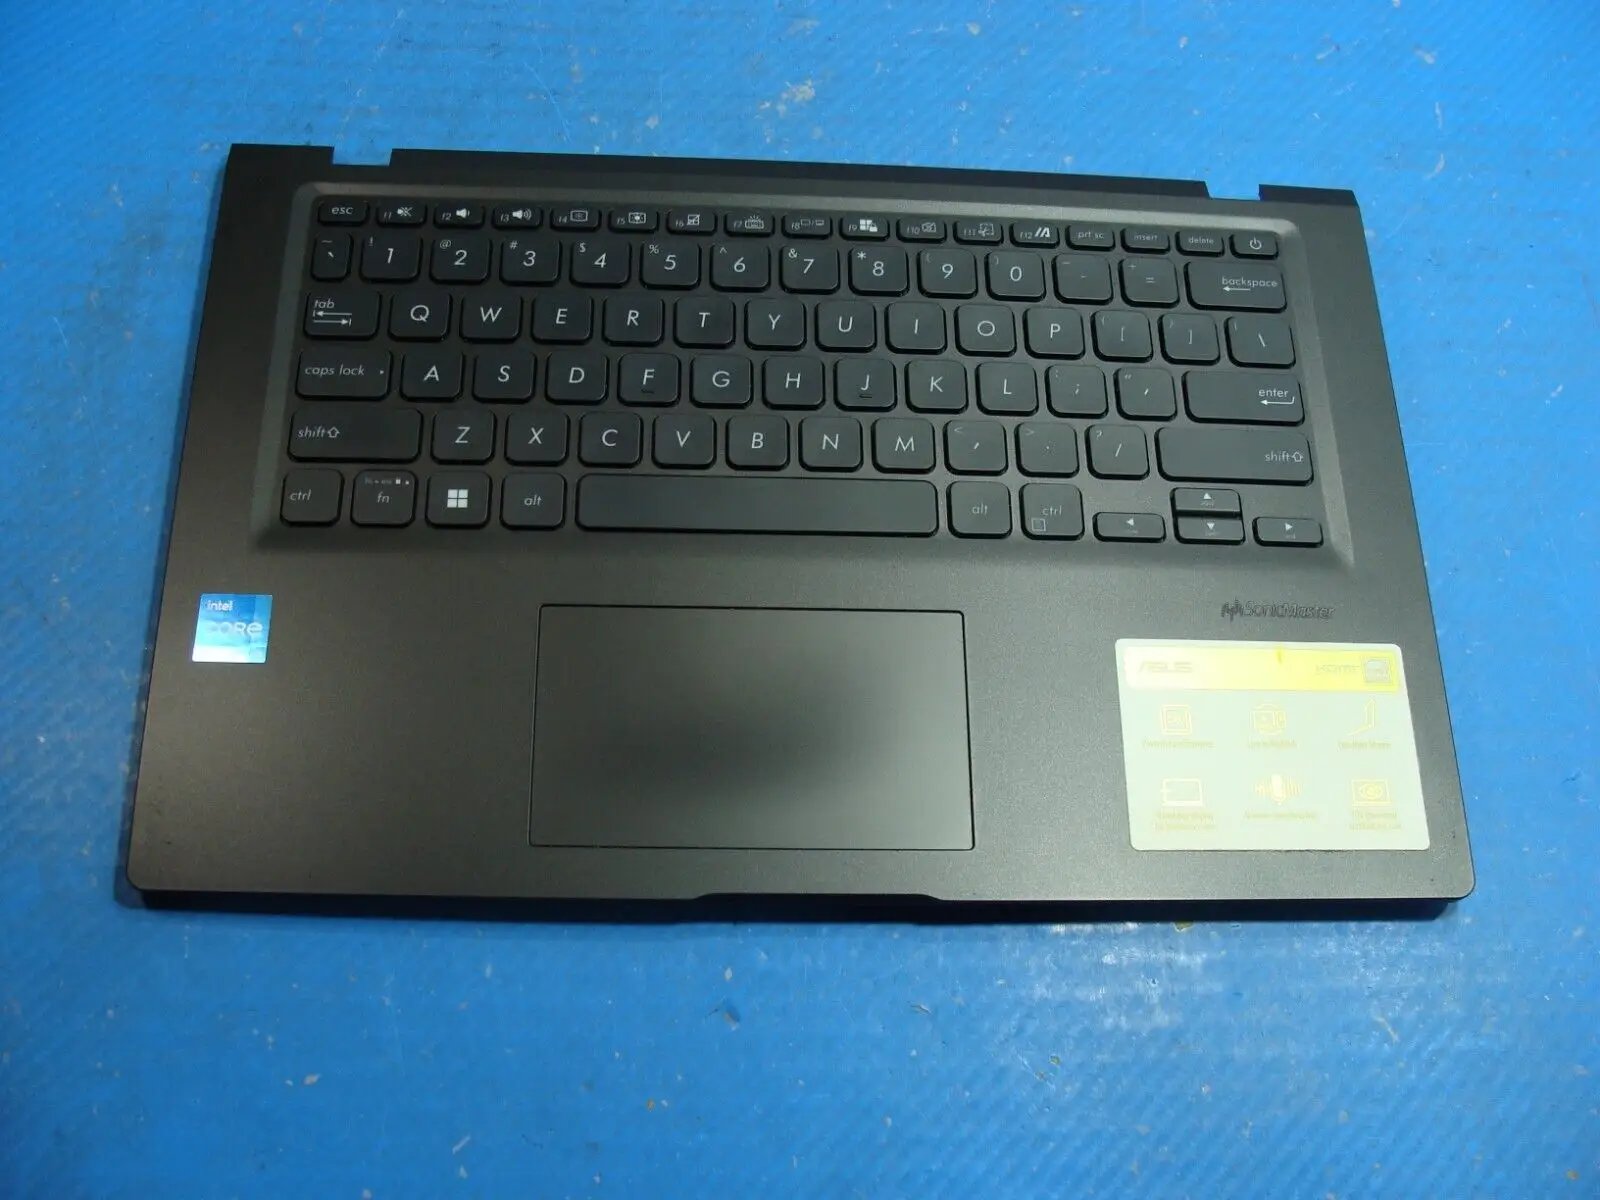 Asus VivoBook 14” F1400E-SB34 OEM Palmrest w/BL Keyboard TouchPad 13NB0TT4P01017